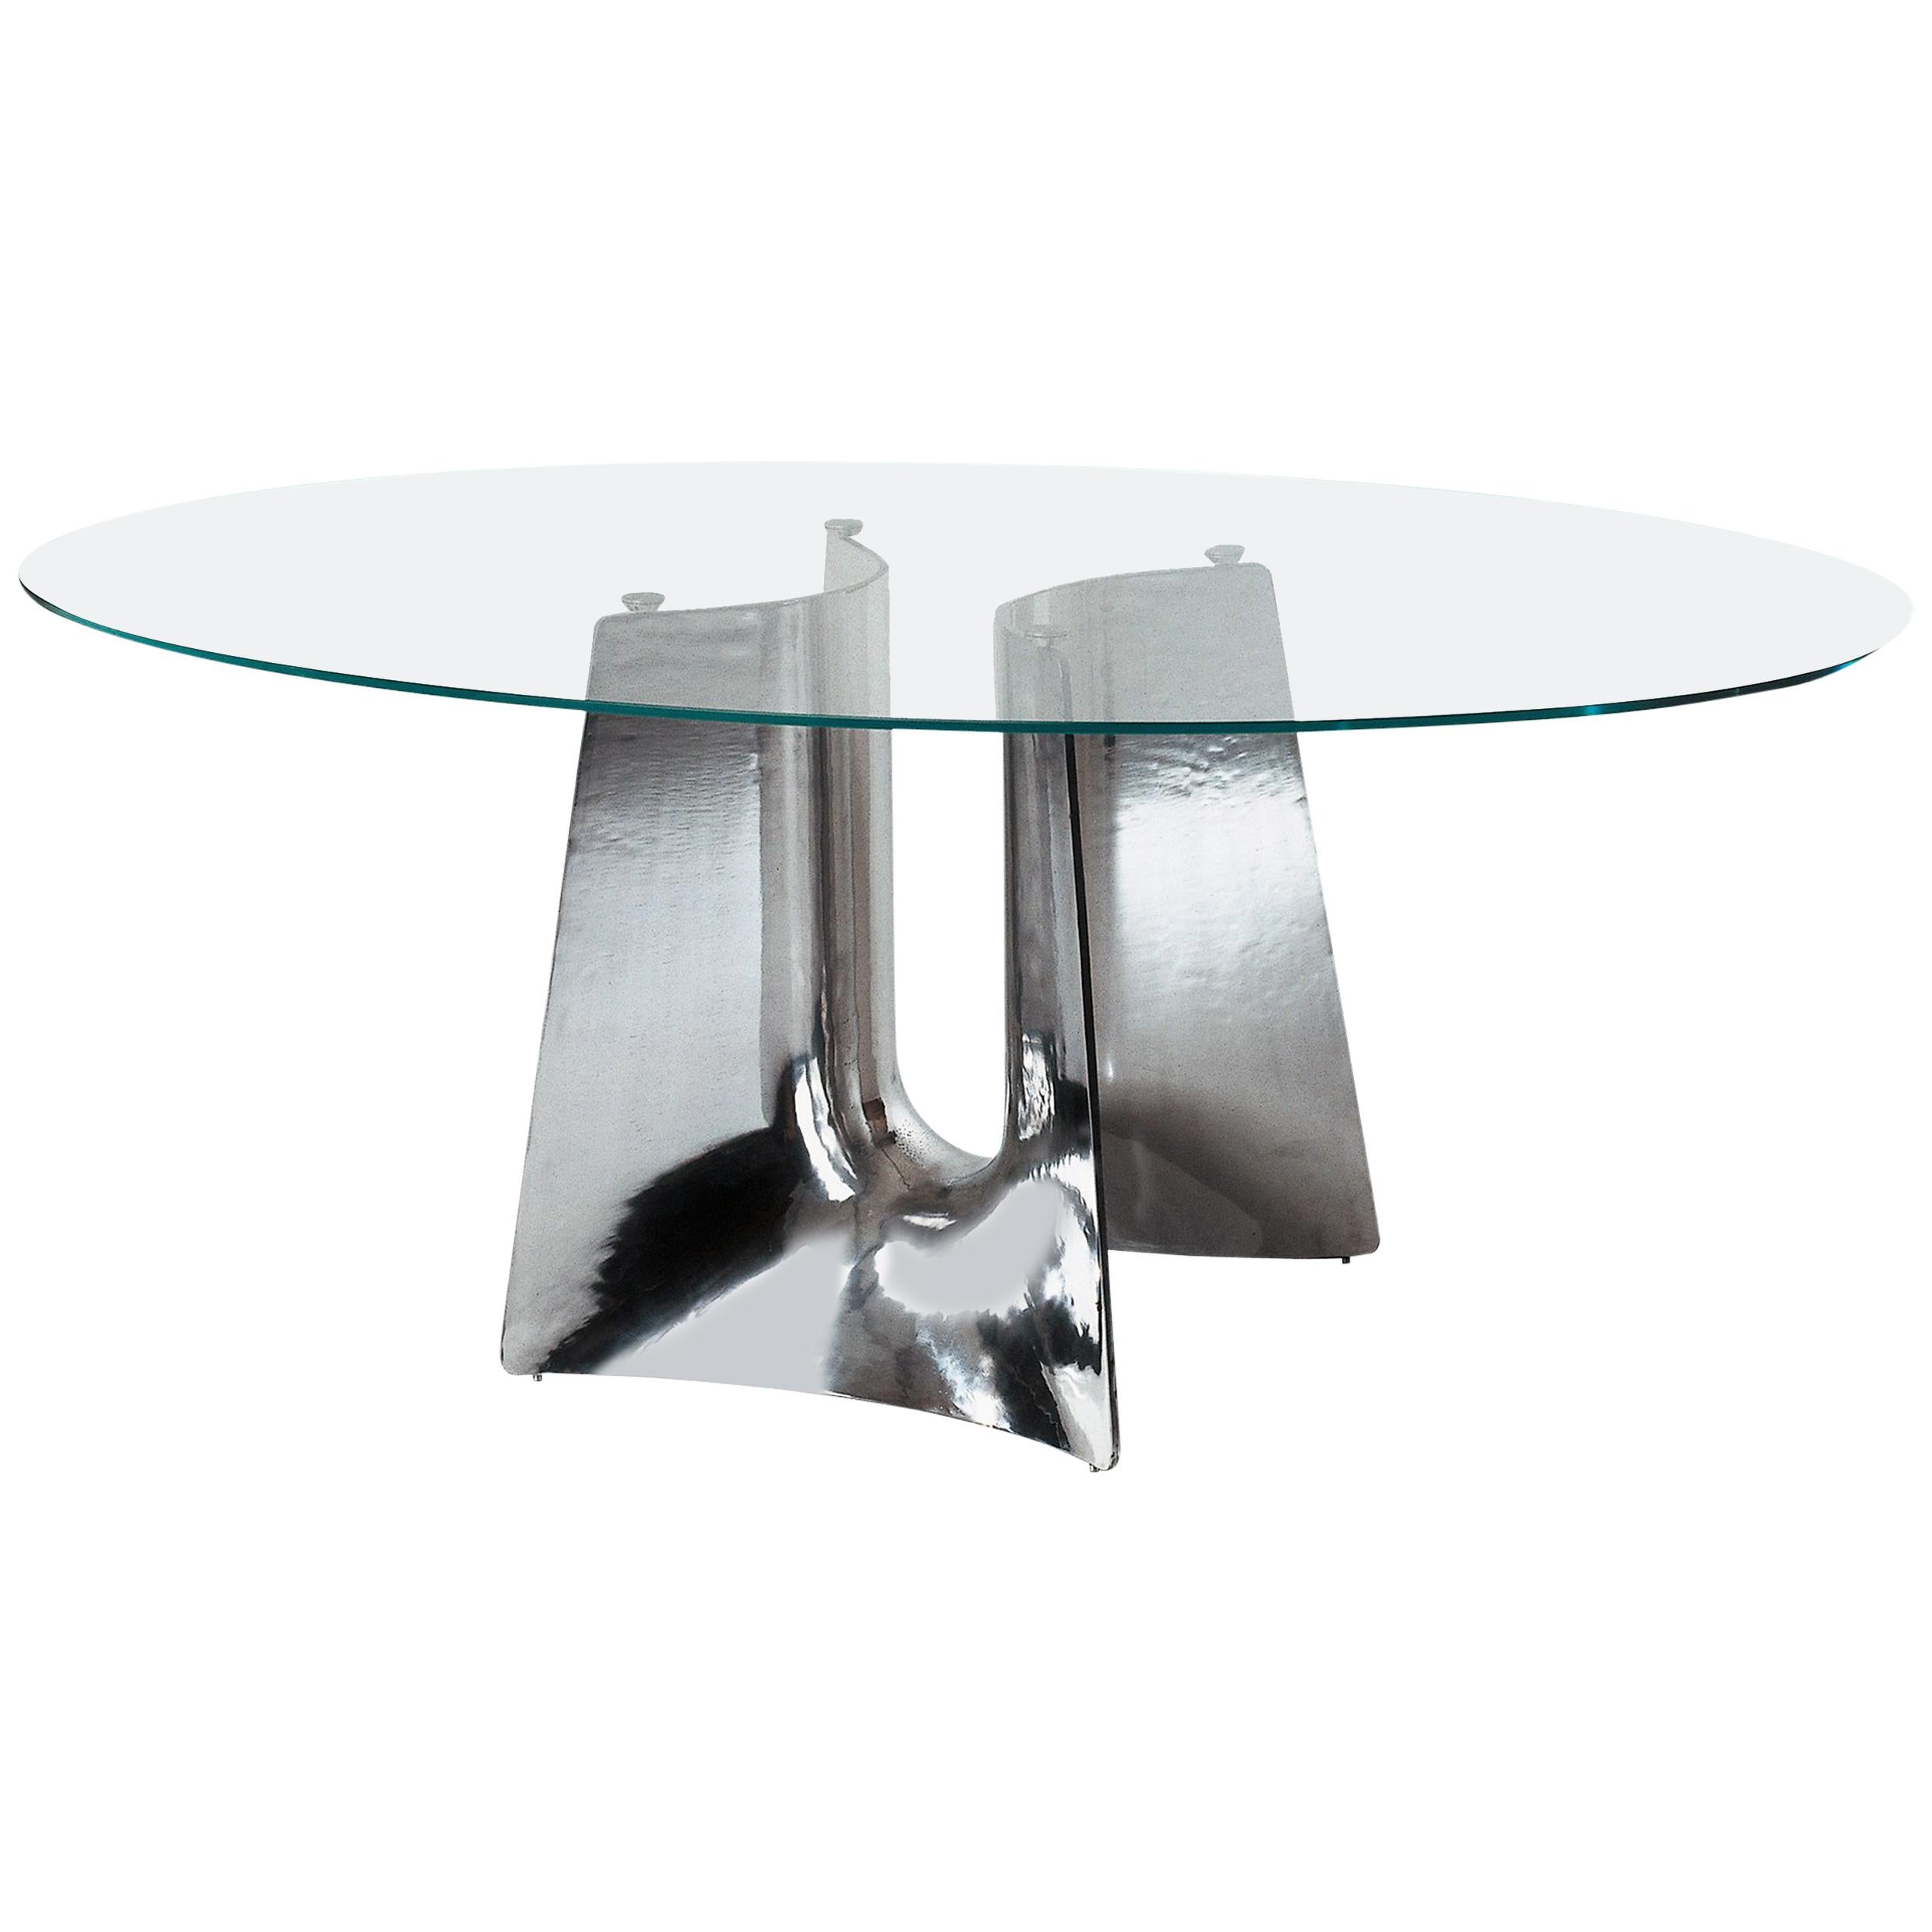 Baleri Italia Bentz table elliptique haute en aluminium avec plateau en verre par Jeff Miller